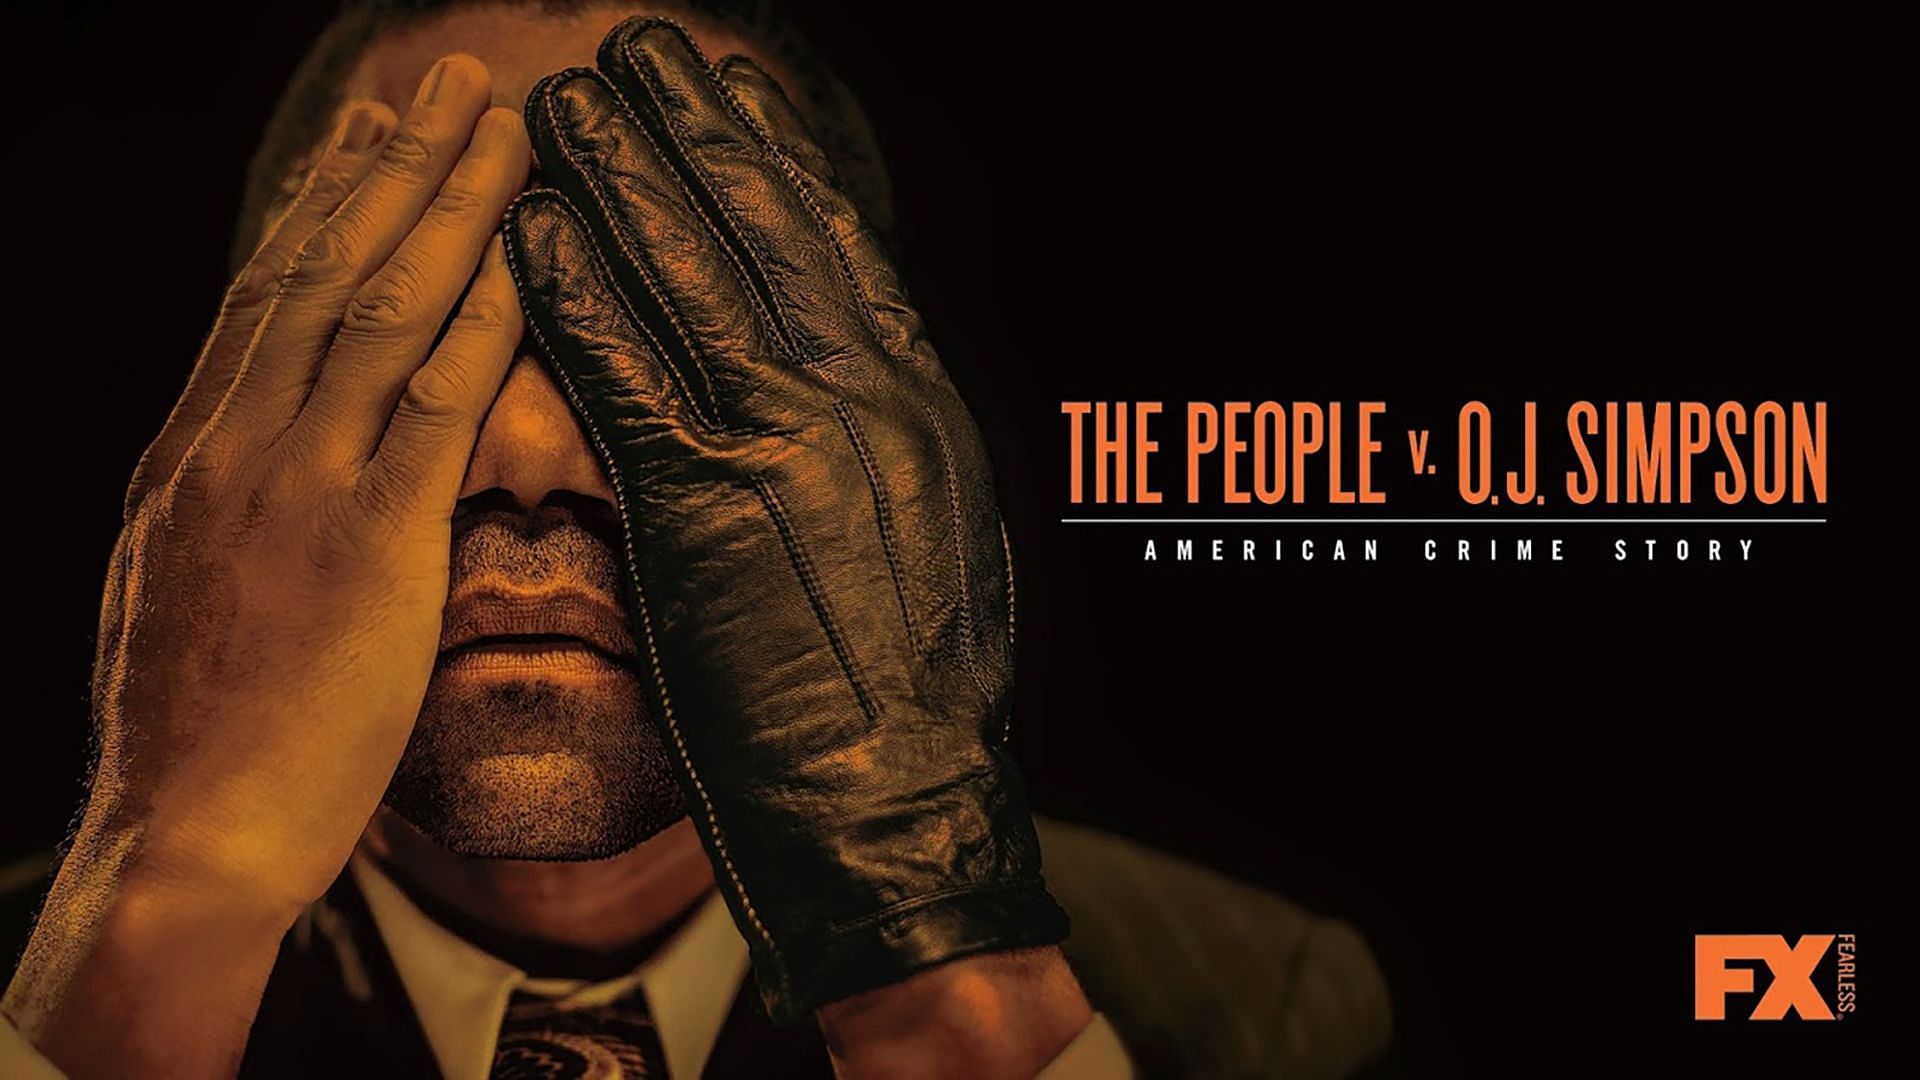 The People vs O.J. Simpson: American Crime Story (Image via FX)